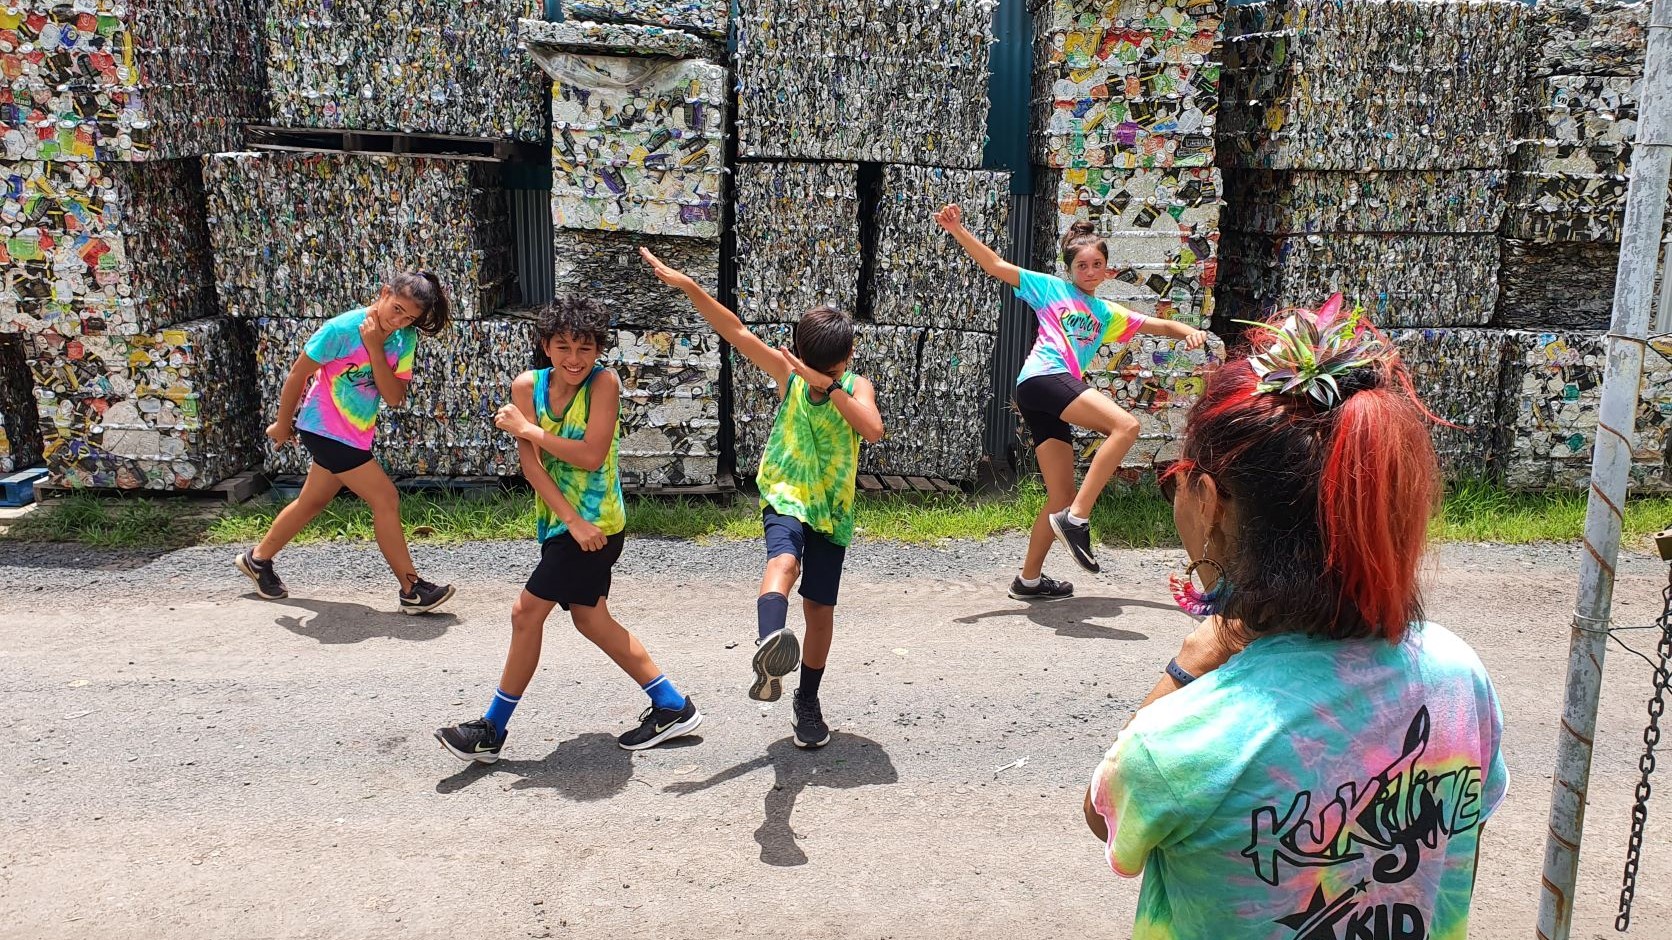 Taau, Taku Tita – young dancers encourage us to take responsibility for waste